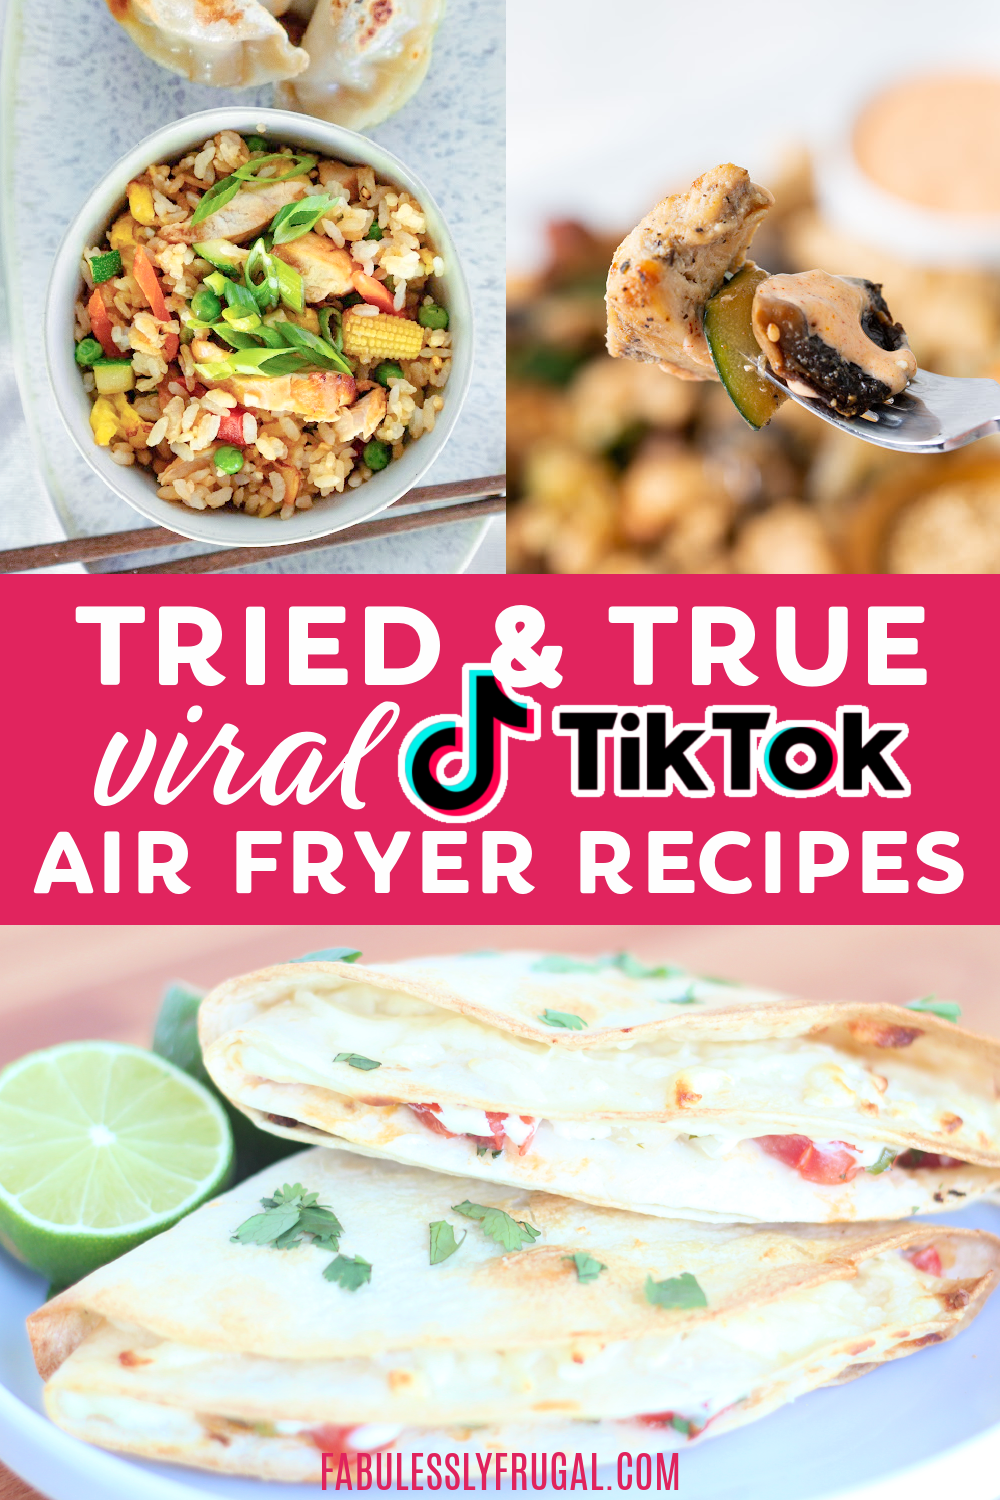 https://fabulesslyfrugal.com/wp-content/uploads/2021/07/3-viral-TikTok-Air-Fryer-Recipes-Pinterest-Pin-2.png